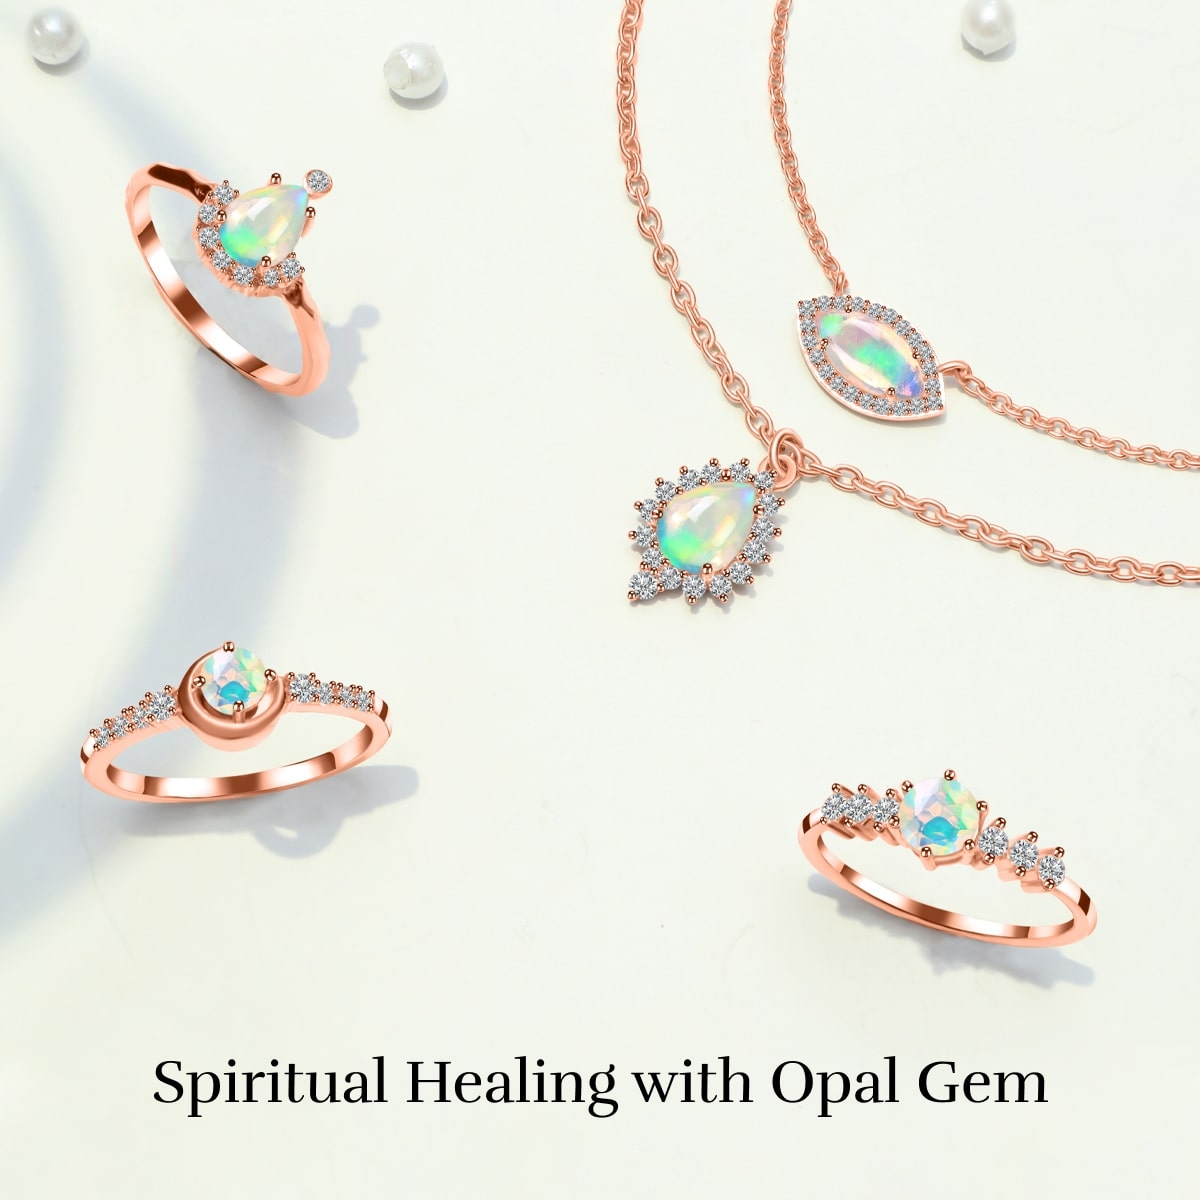 Spiritual benefits of opal